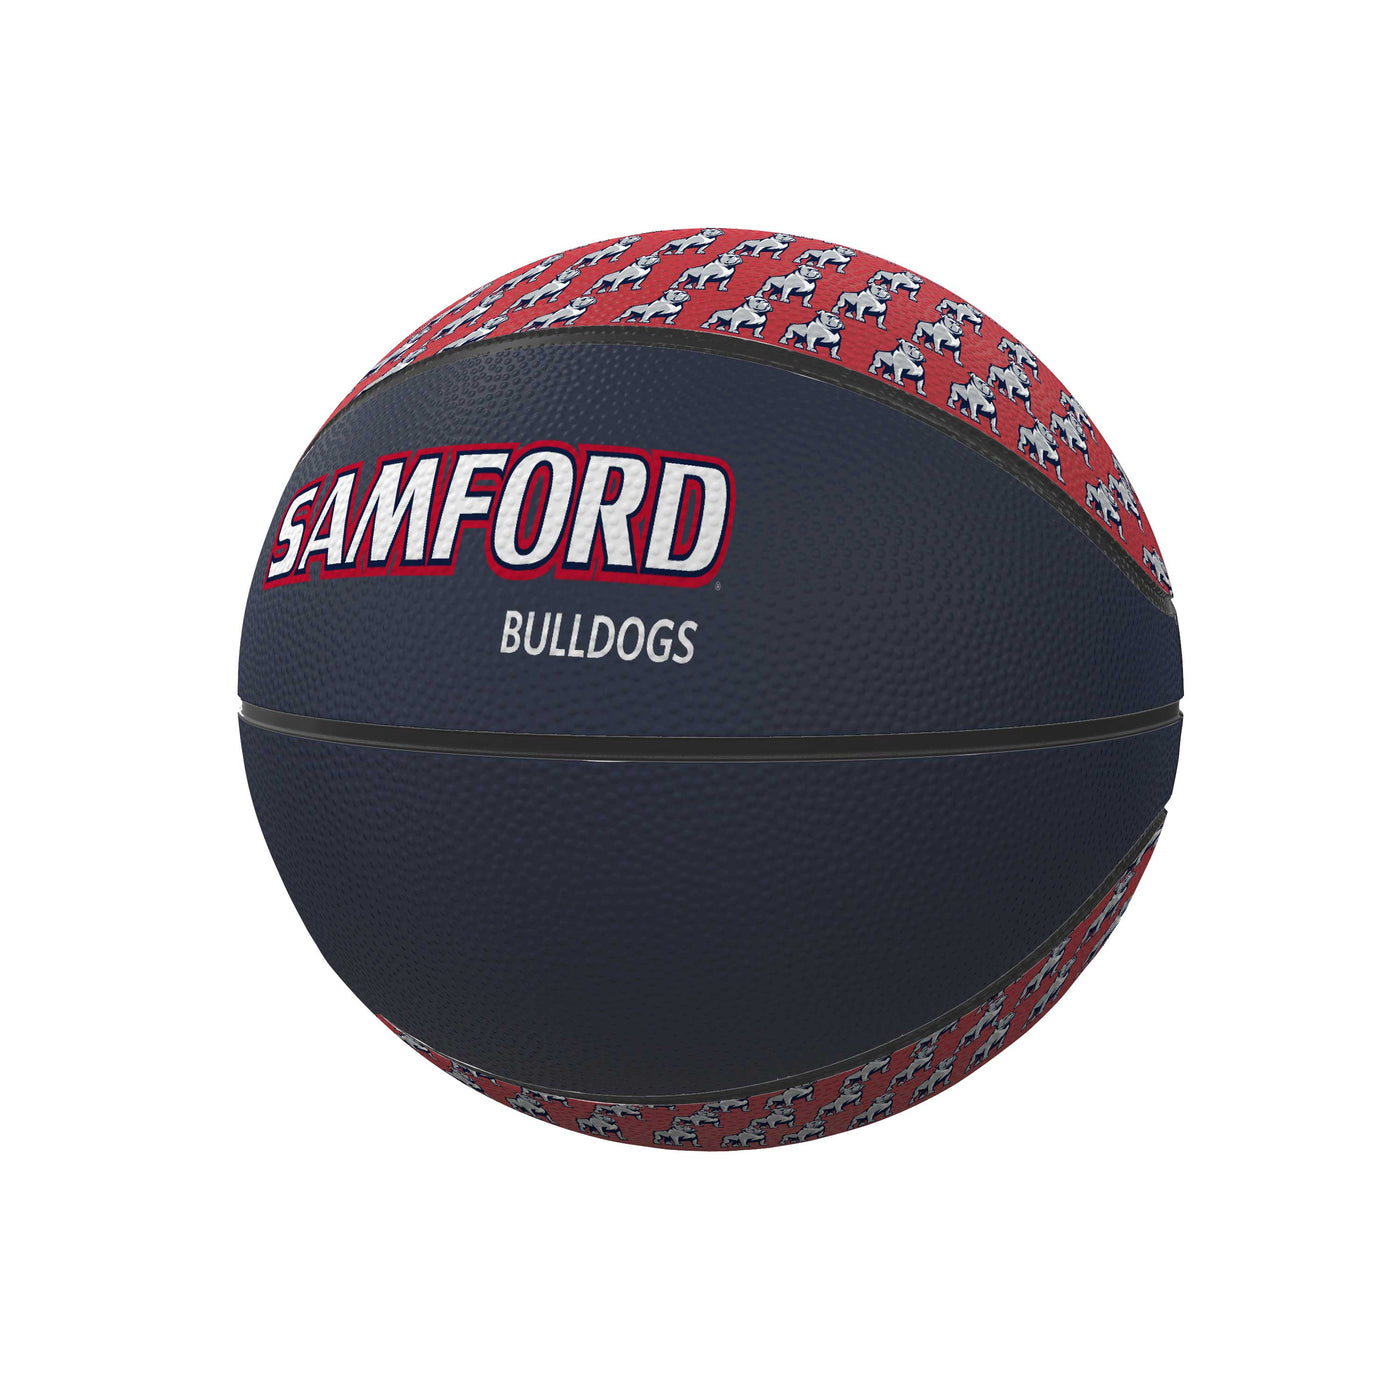 Samford Mini Size Rubber Basketball